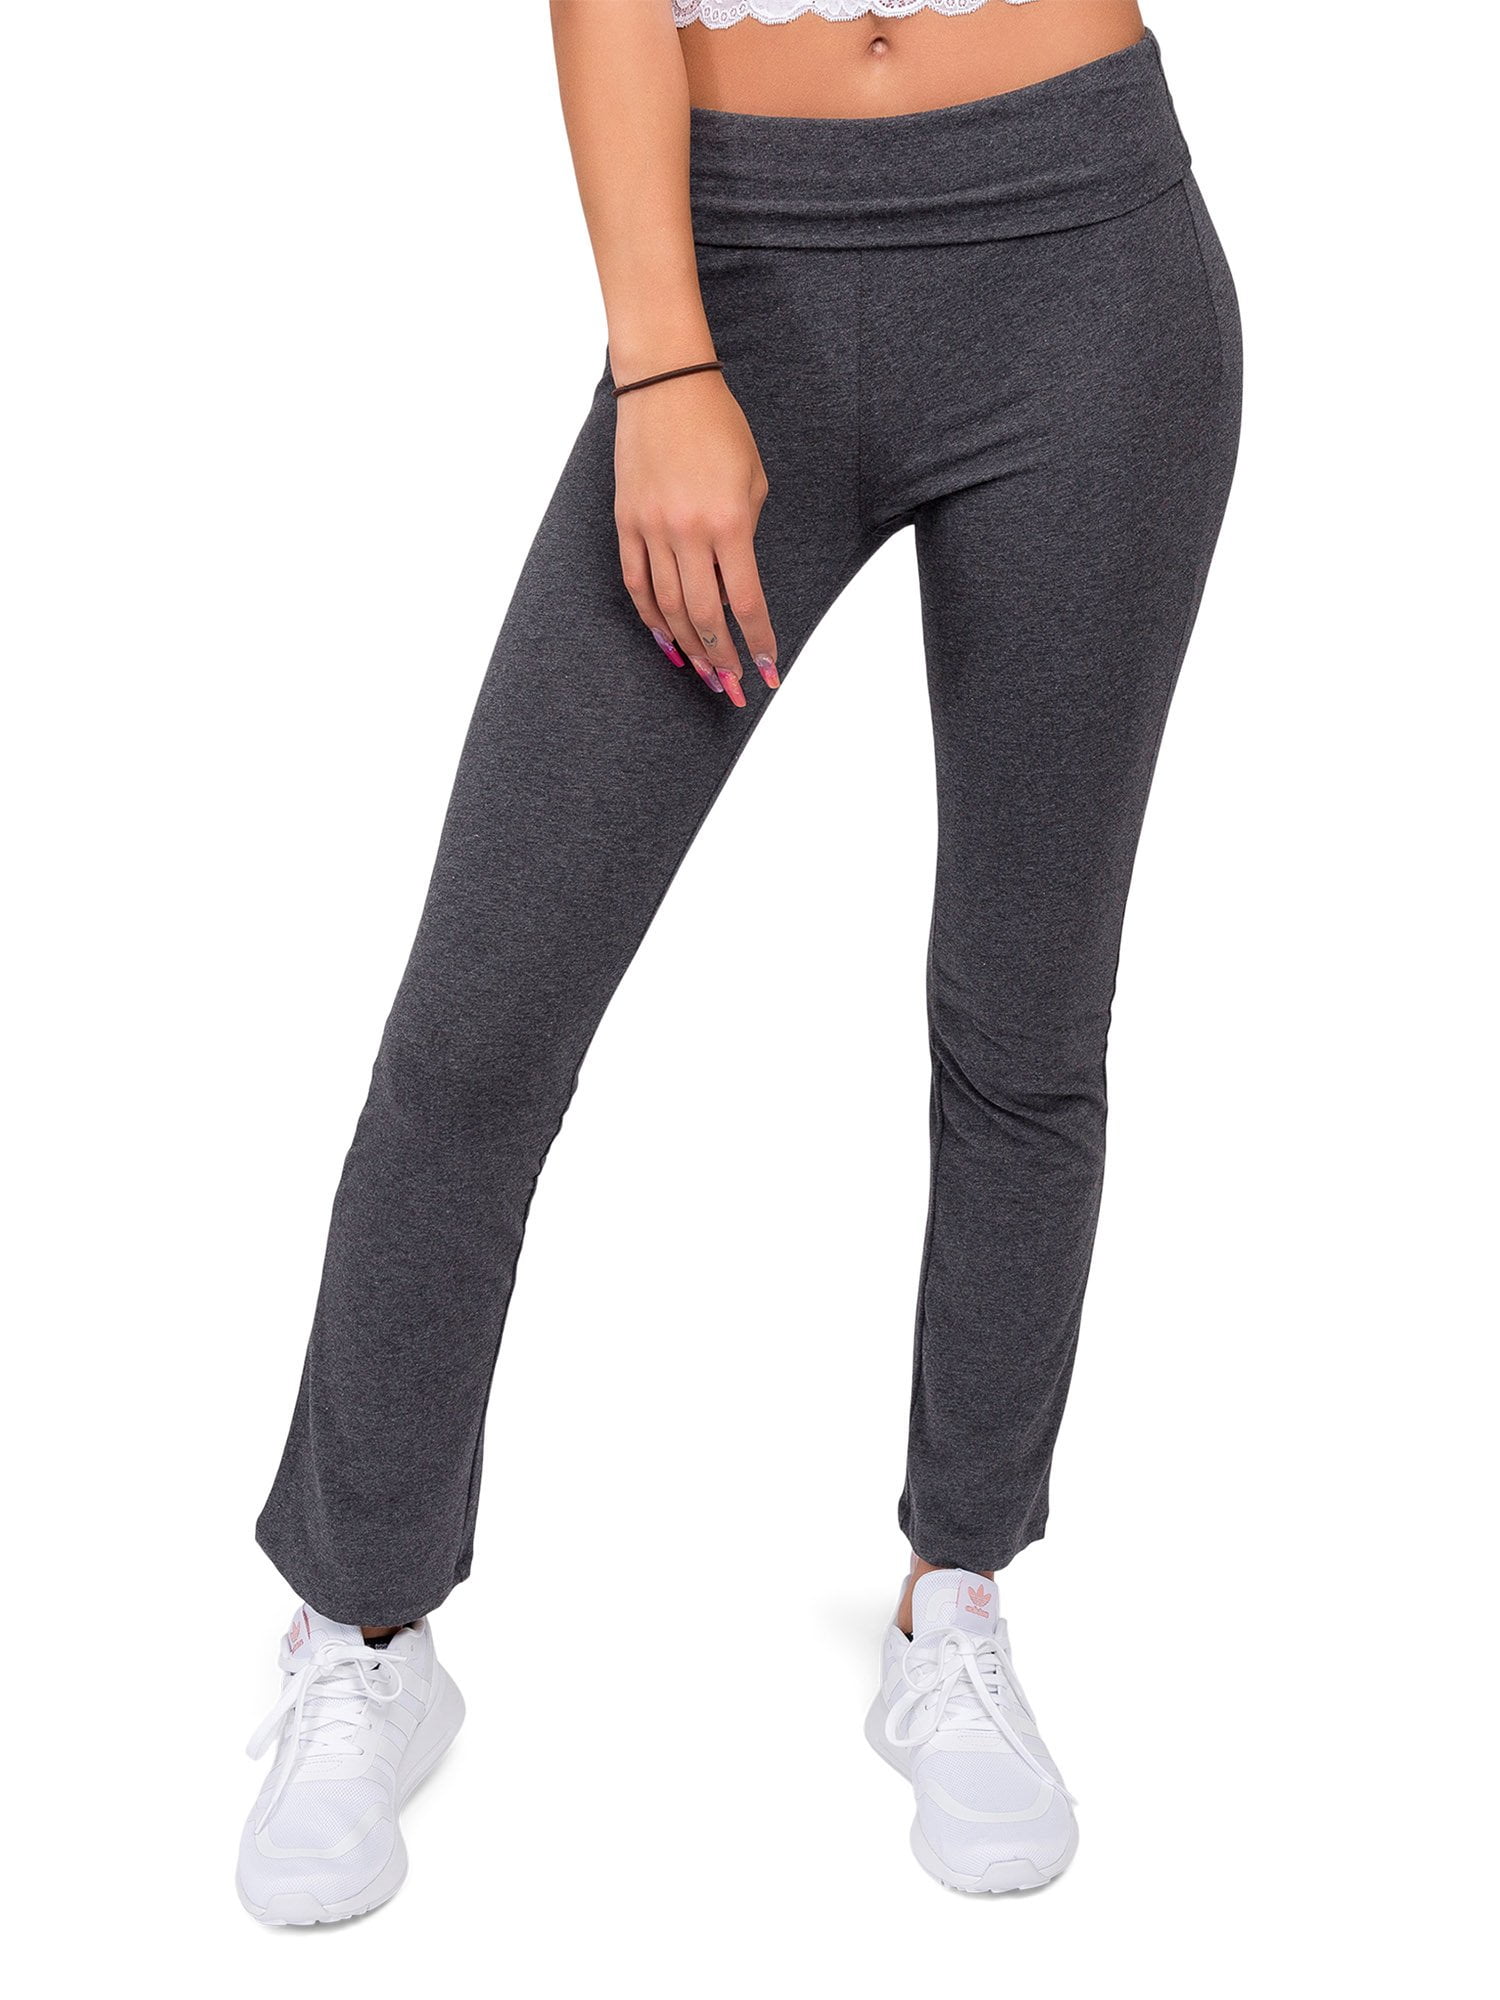 G-Style USA Women's Bootcut Flare Leggings Yoga Pants 8150